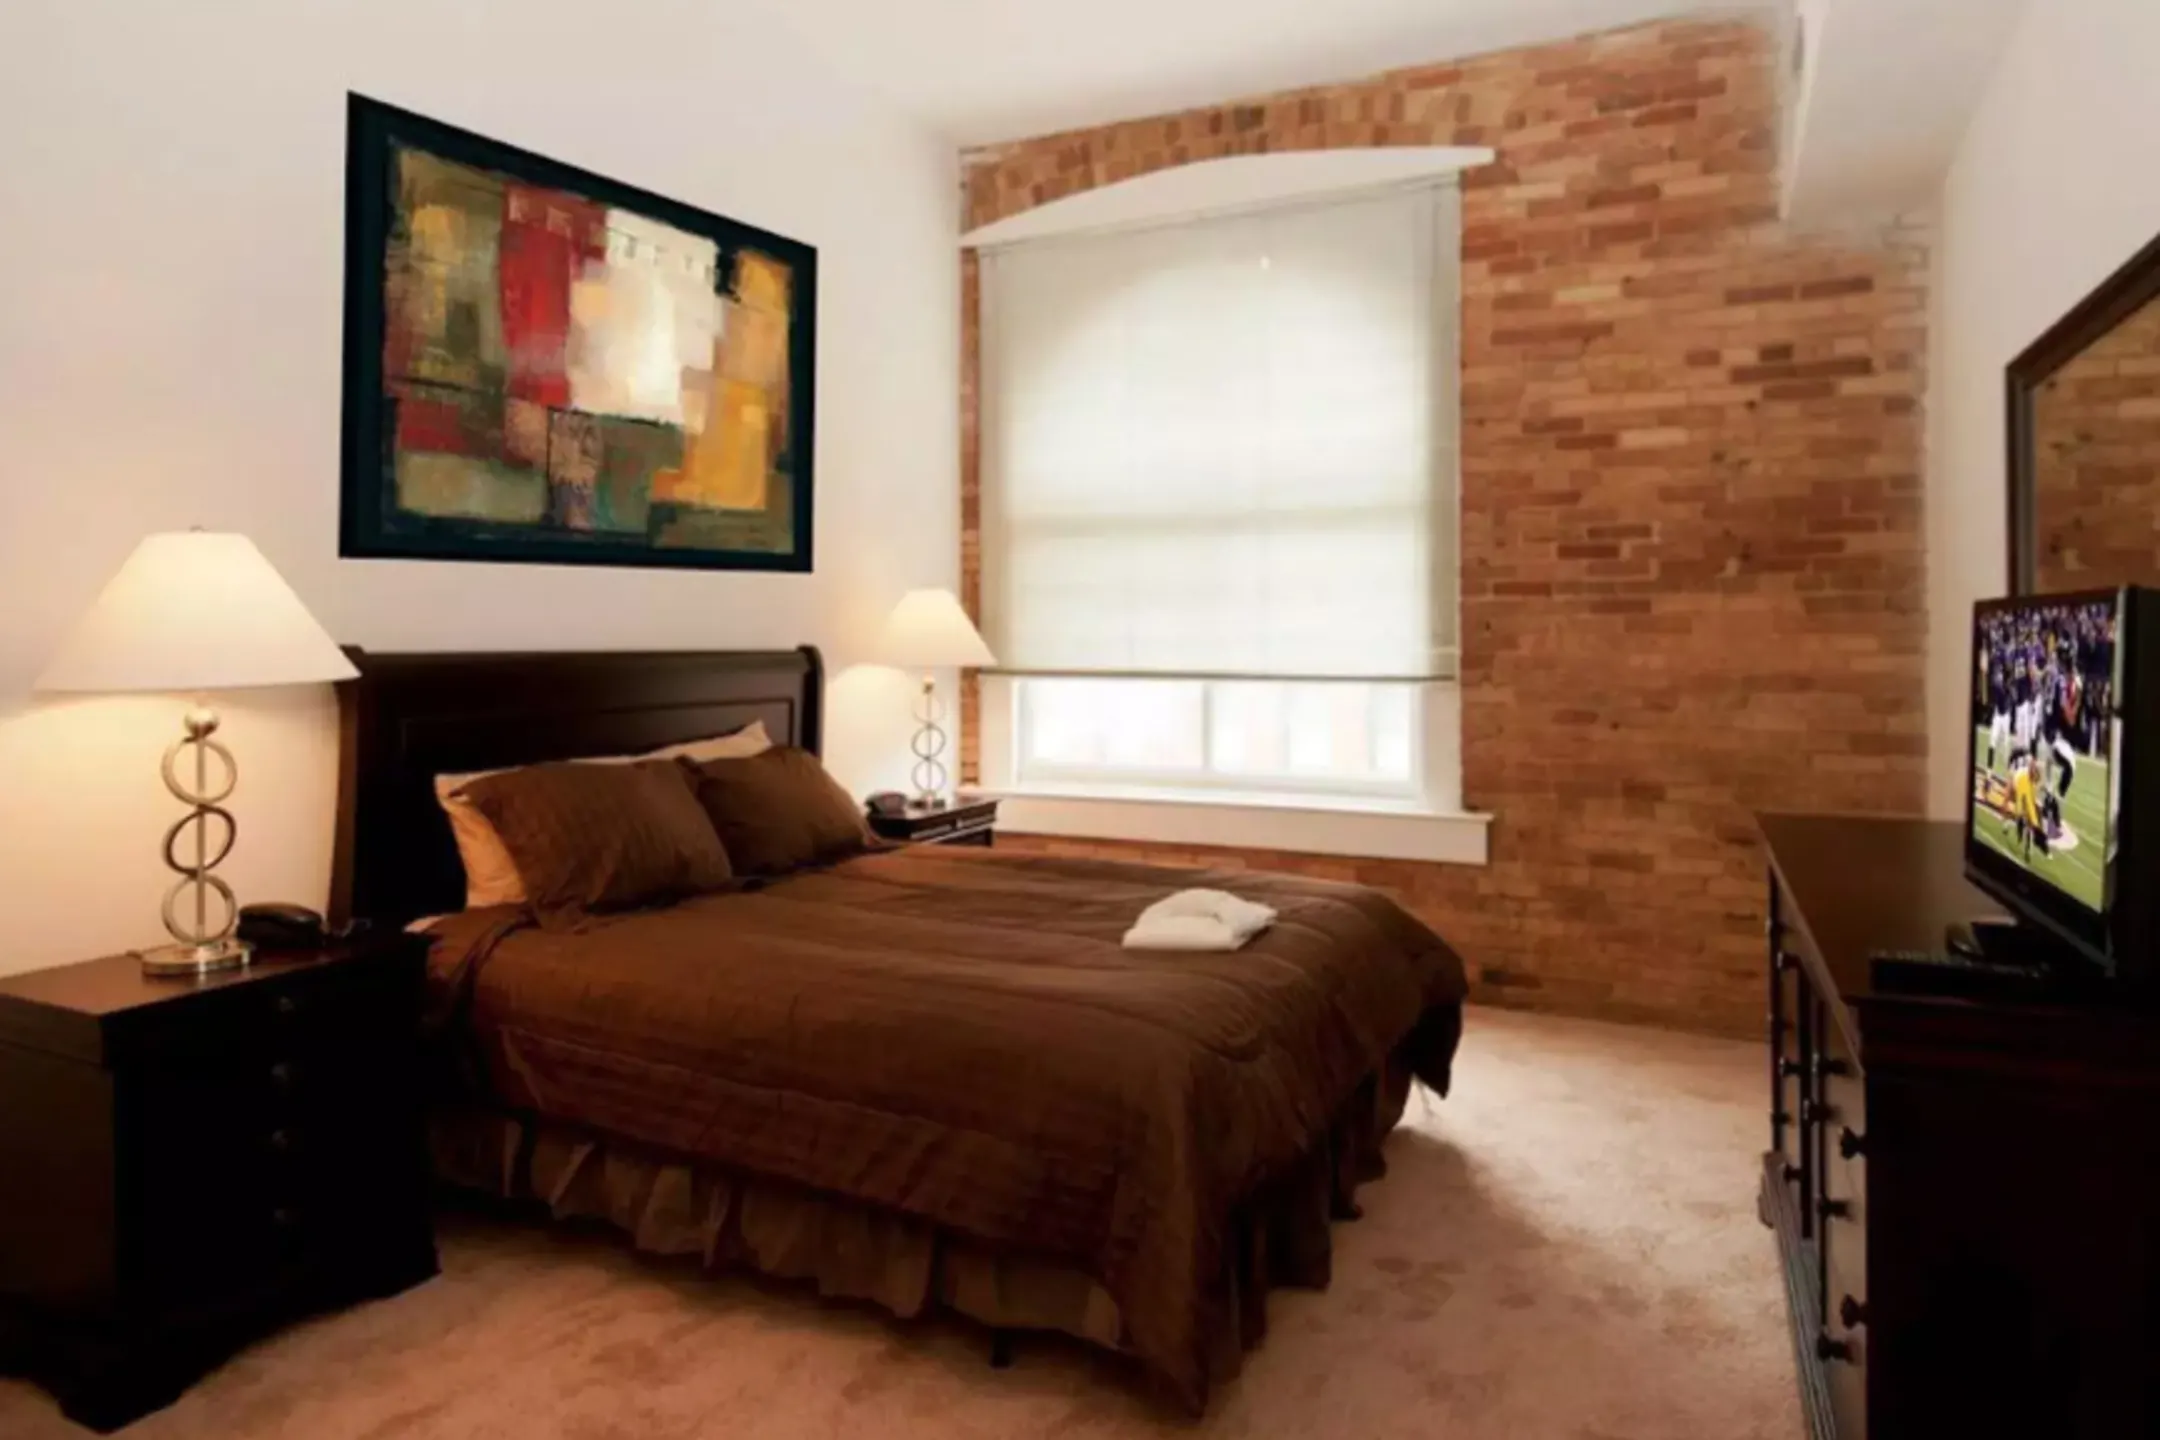 Bedroom - Marlboro Classic & Redwood Square - Baltimore, MD